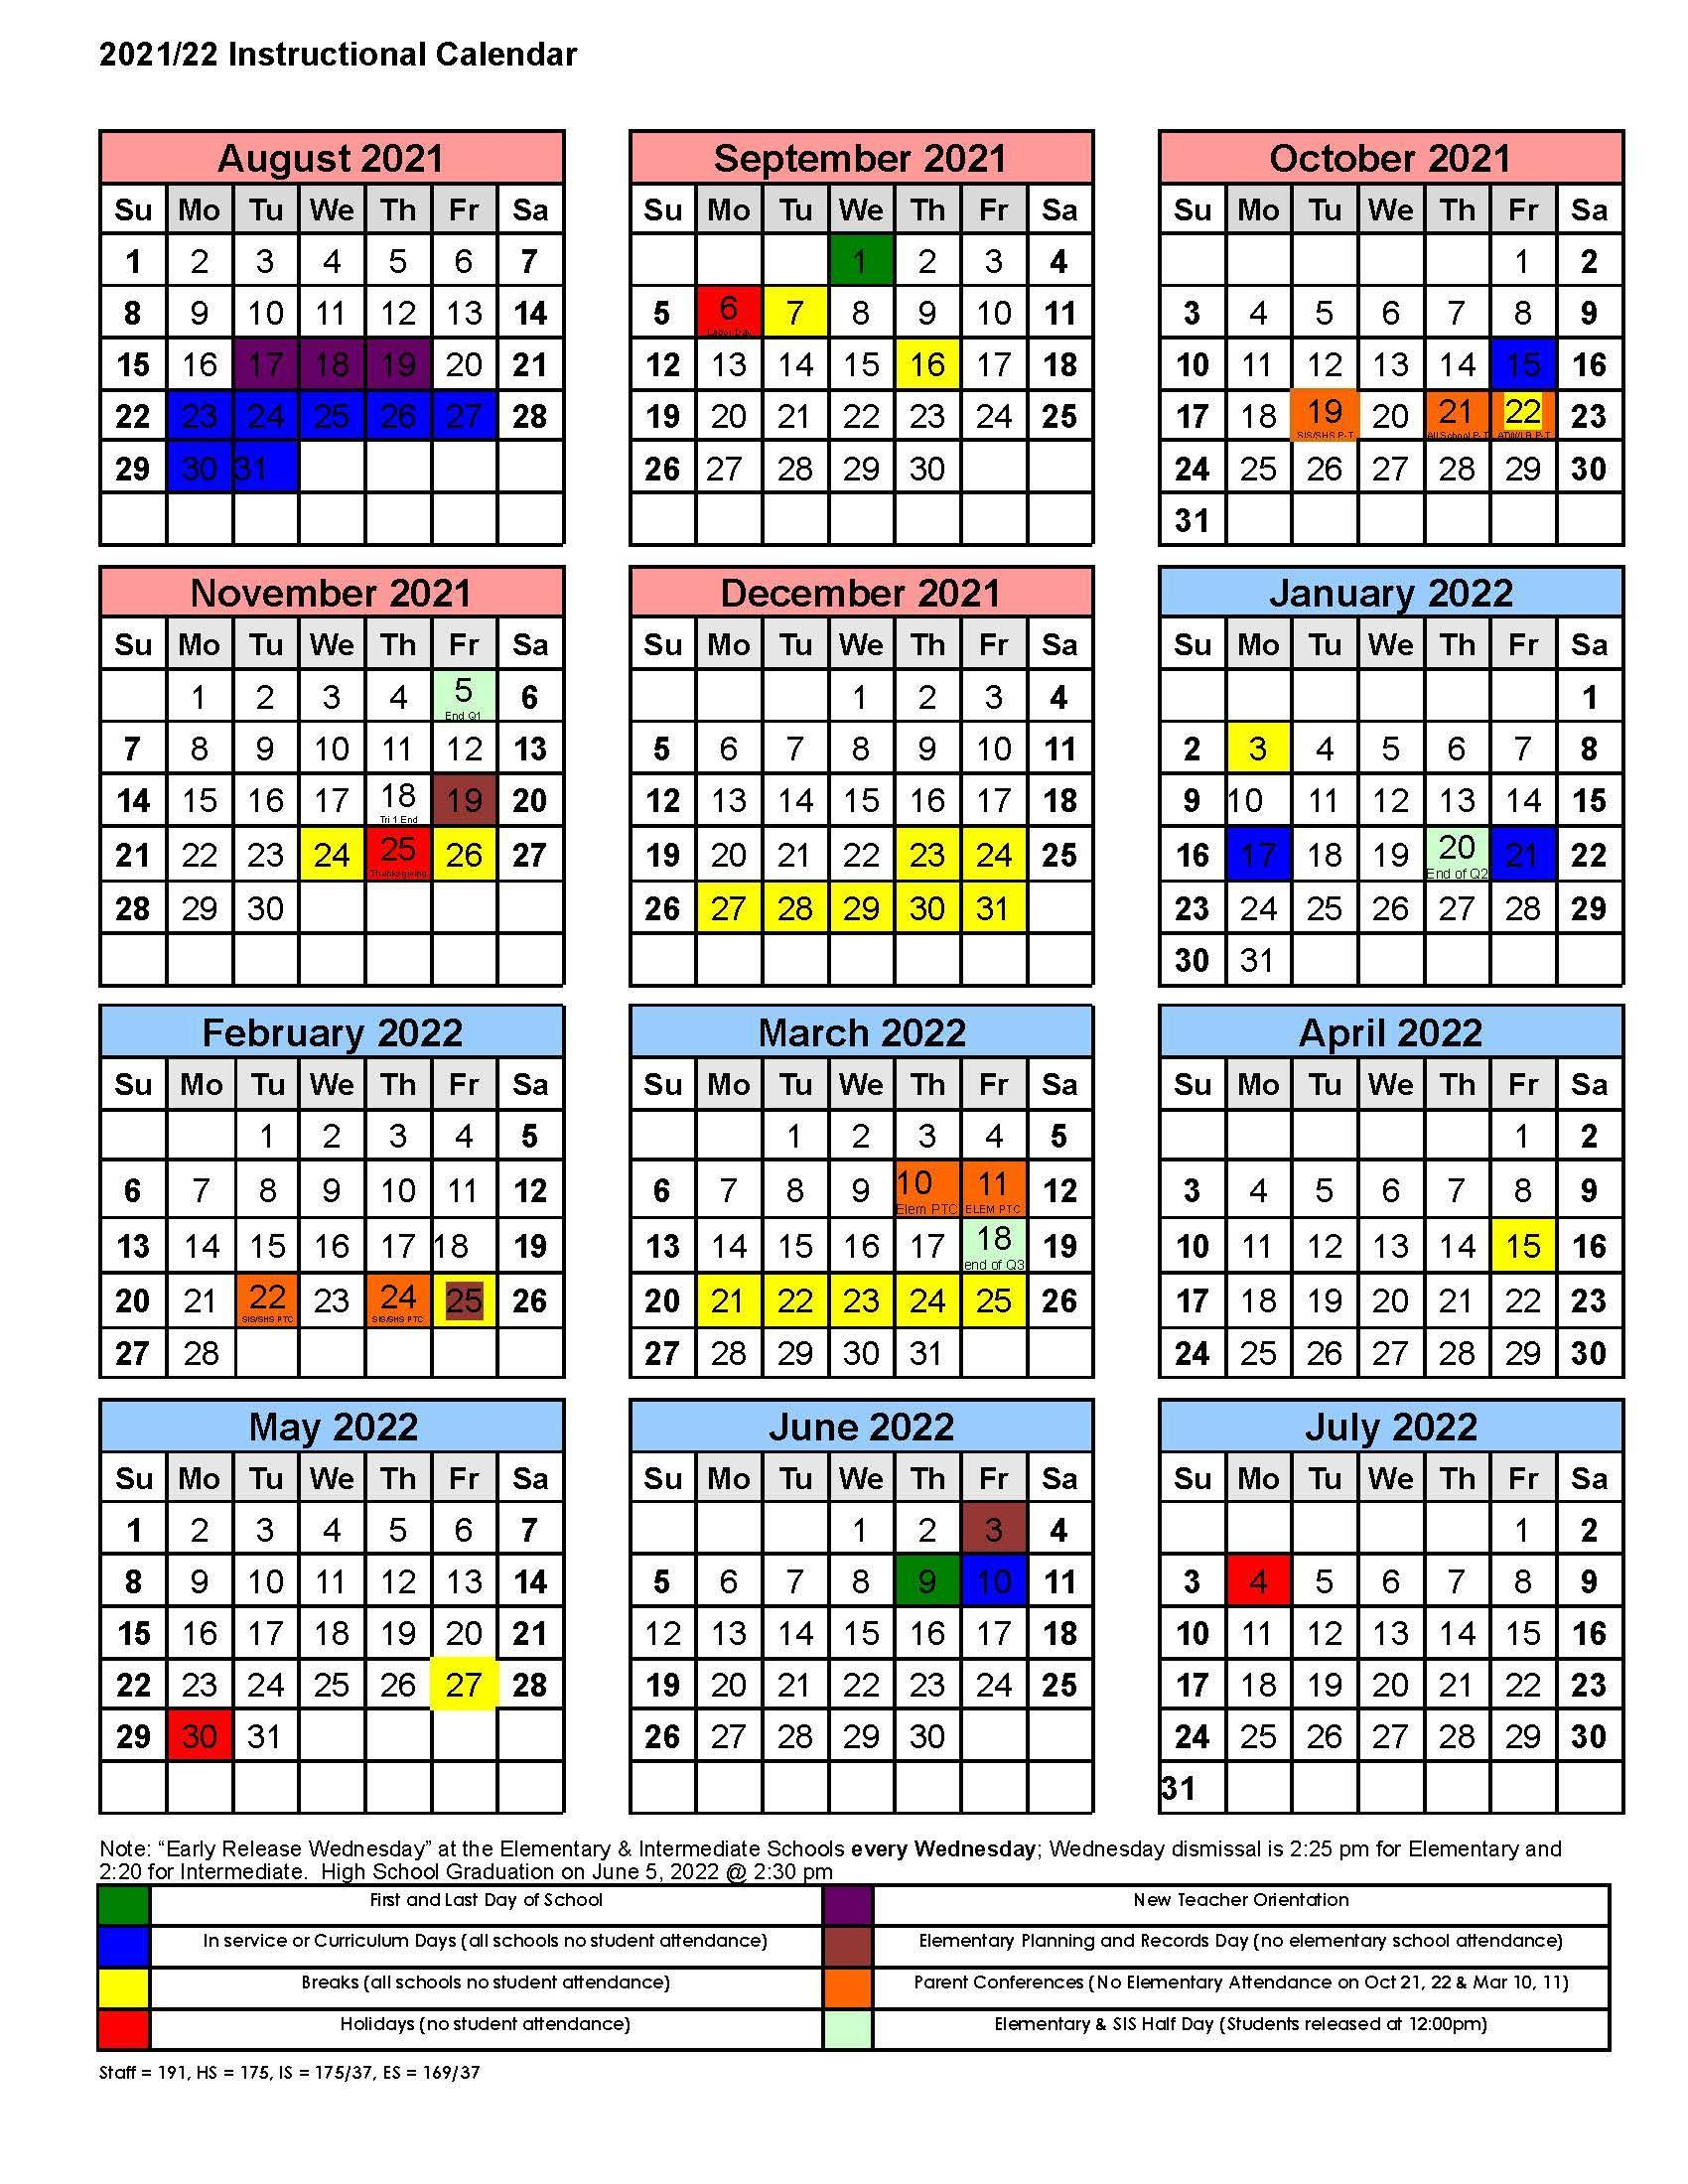 Palominas School District Calendar 2022